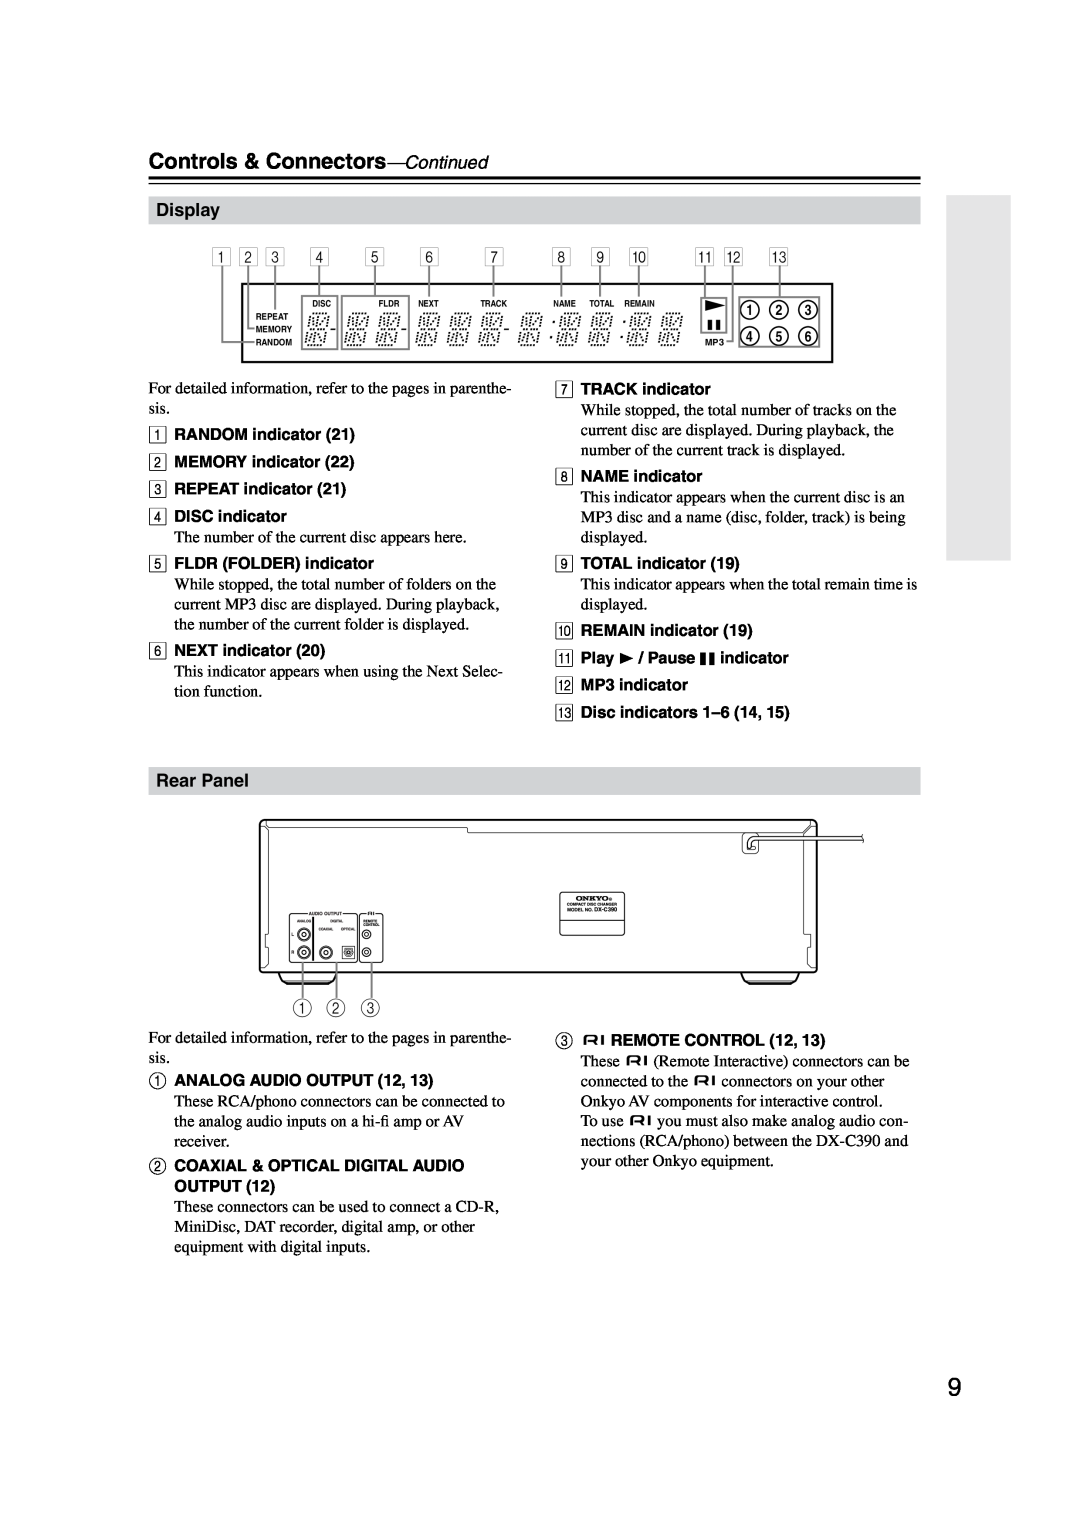 Onkyo DX-C390 instruction manual Controls & Connectors-Continued, 1 2 3 4 5 6 7 8 9 0 A B C, Display, Rear Panel 